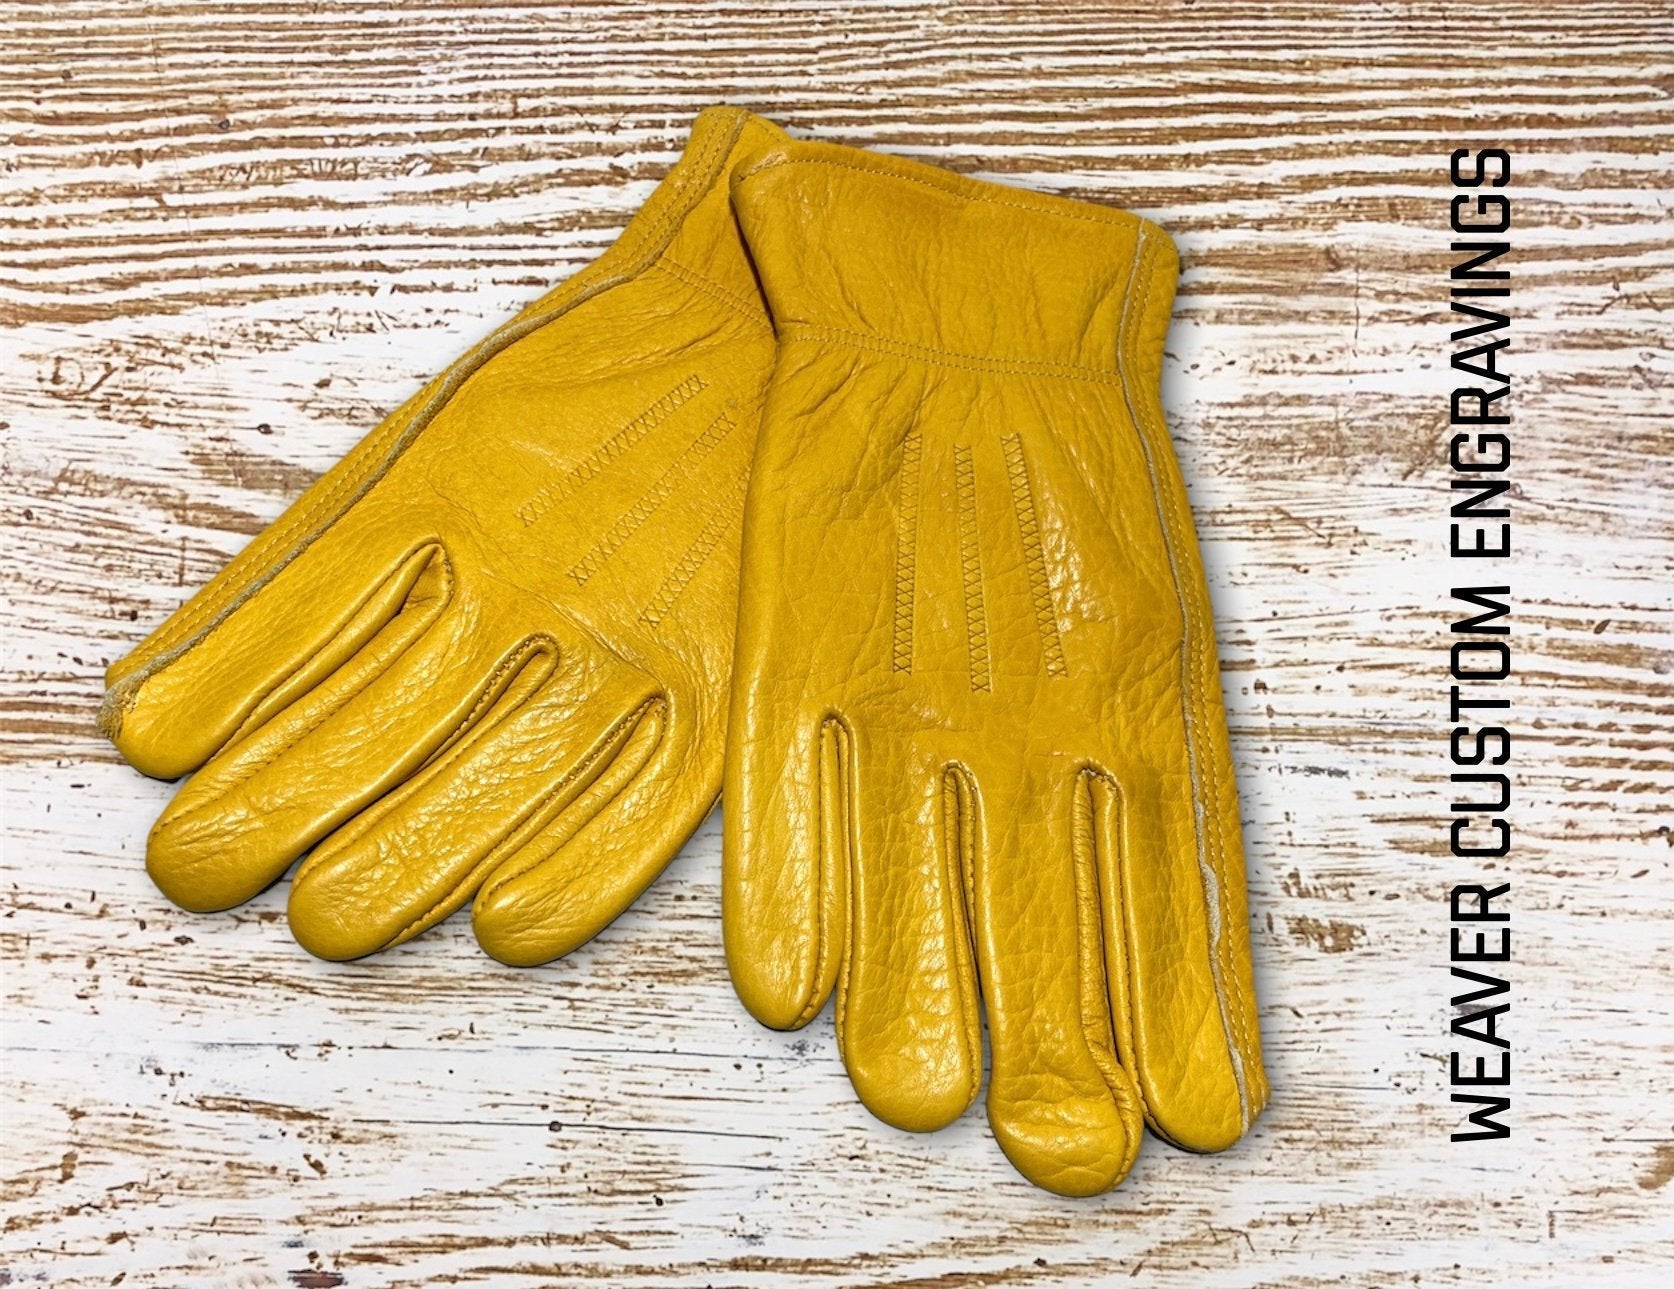 WORK GLOVES, Customized Personalized Gardening Working Gloves, Construction  Worker Gloves Gift for Men, Custom Work Gloves, Bible Verse 